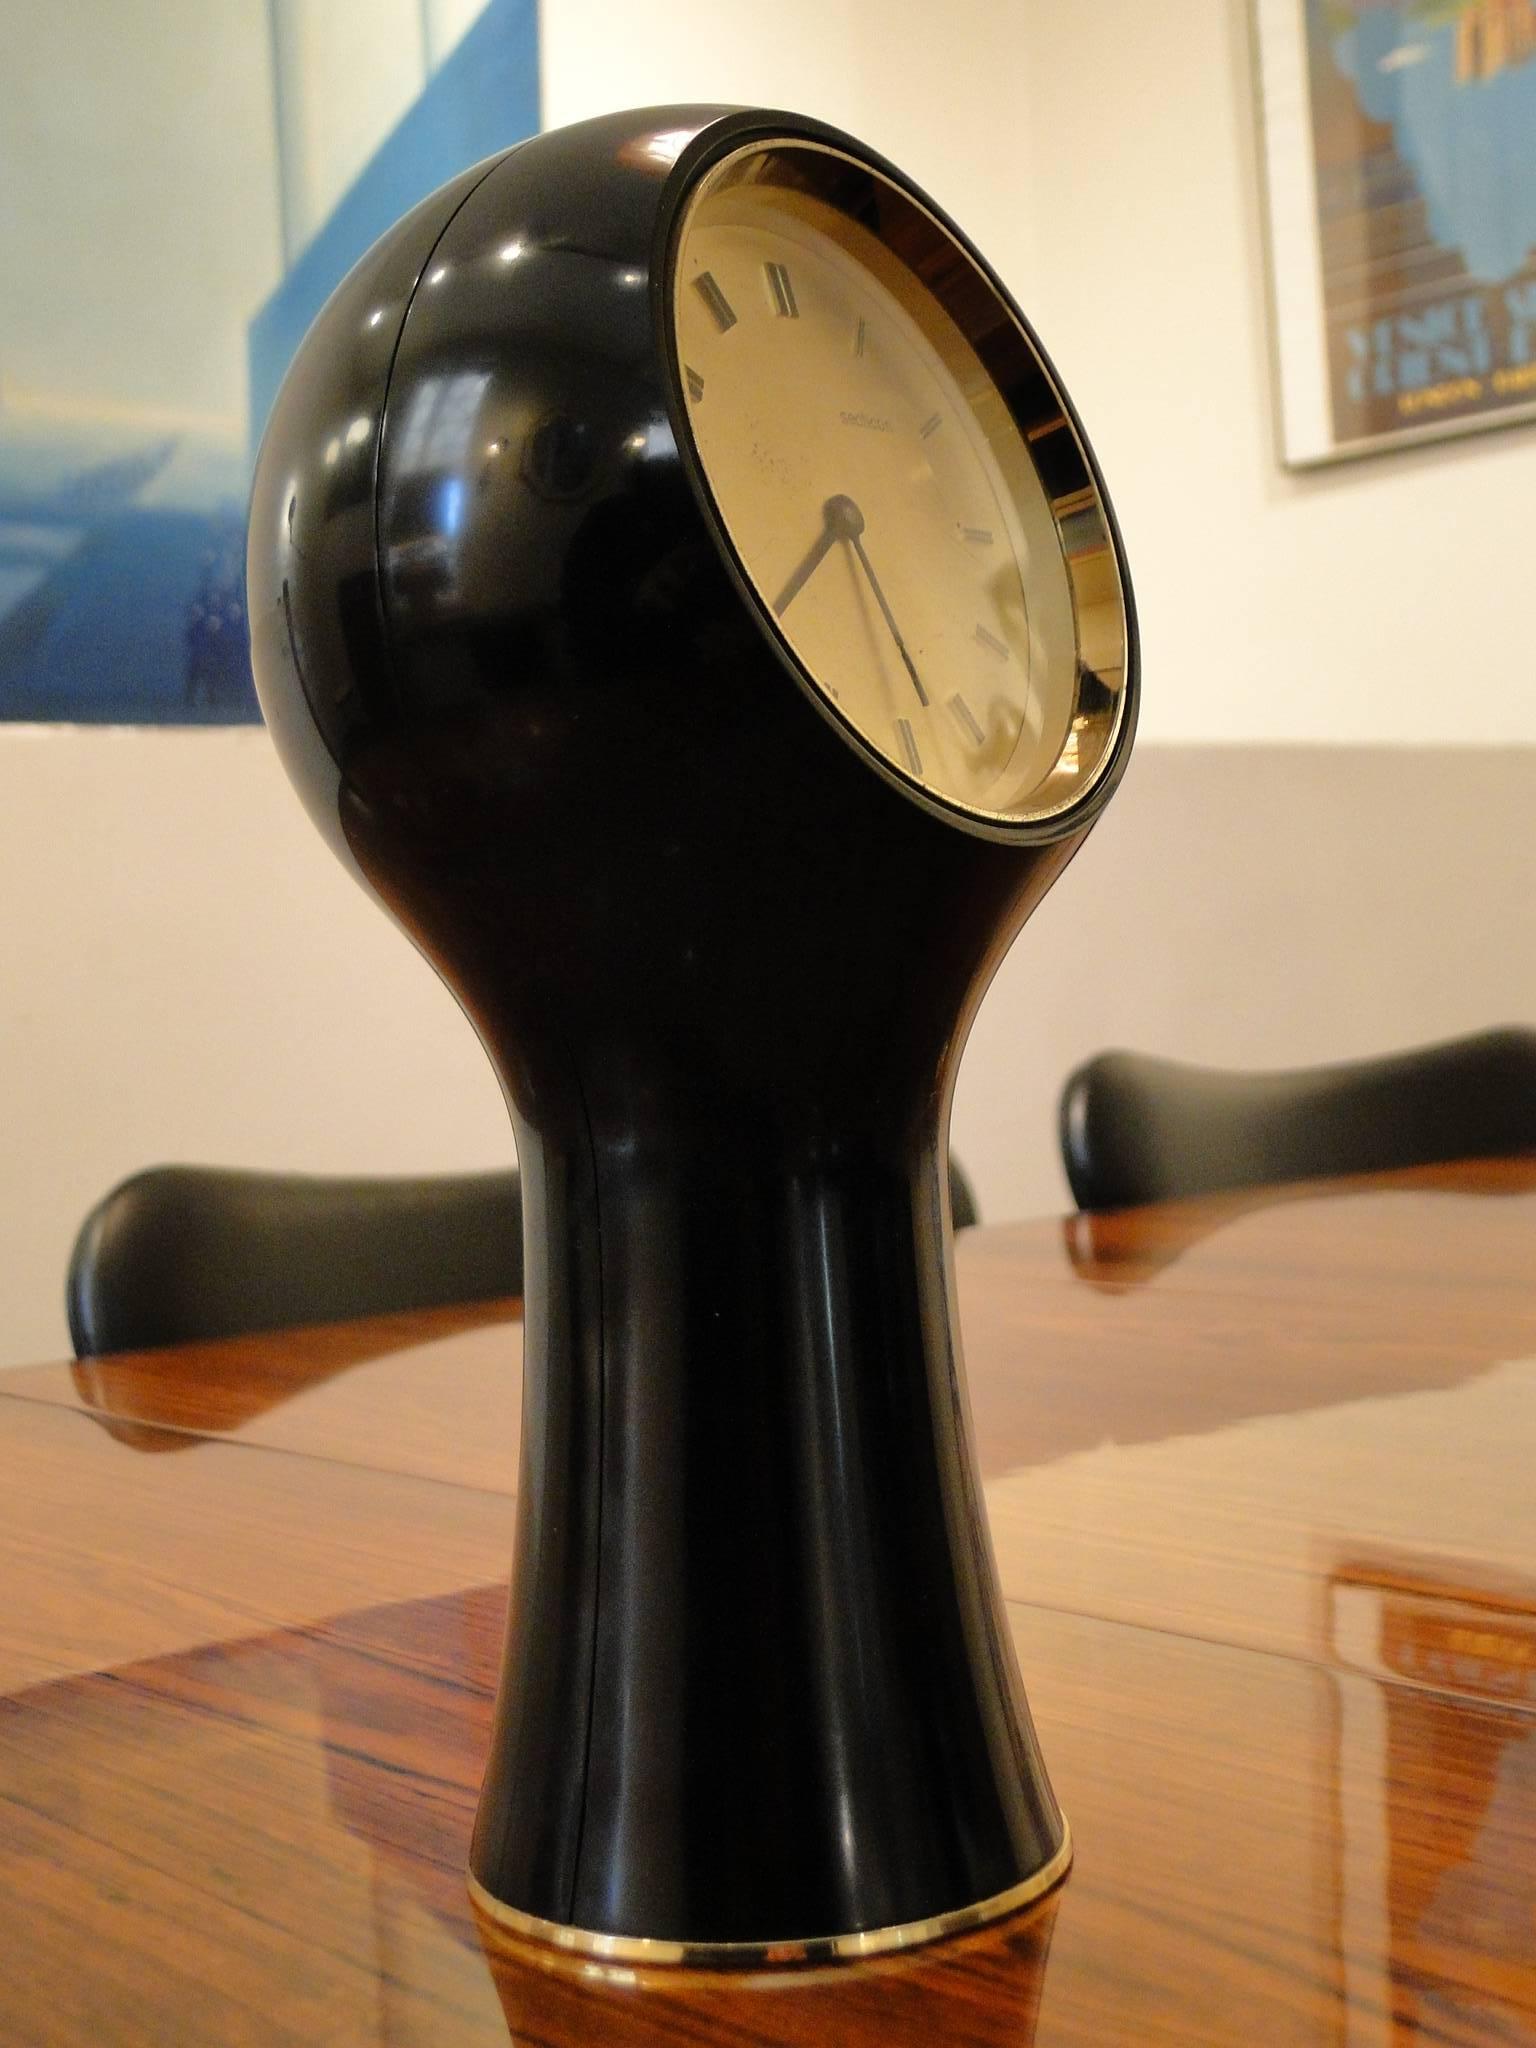 Swiss Angelo Mangiarotti Table Desk Clock for Secticon